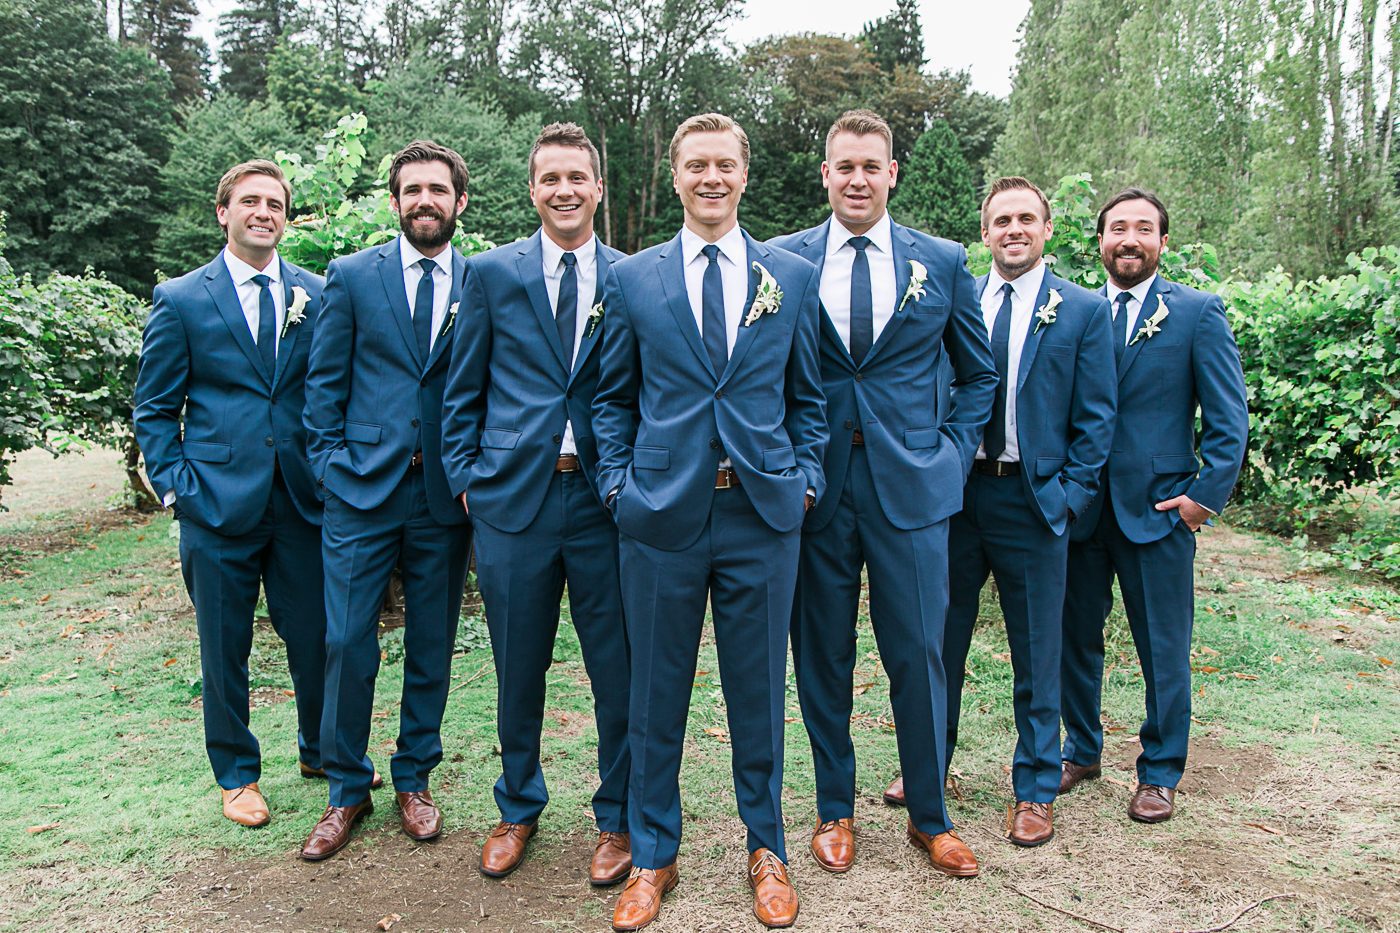 Seattle wedding with groomsmen in navy suits